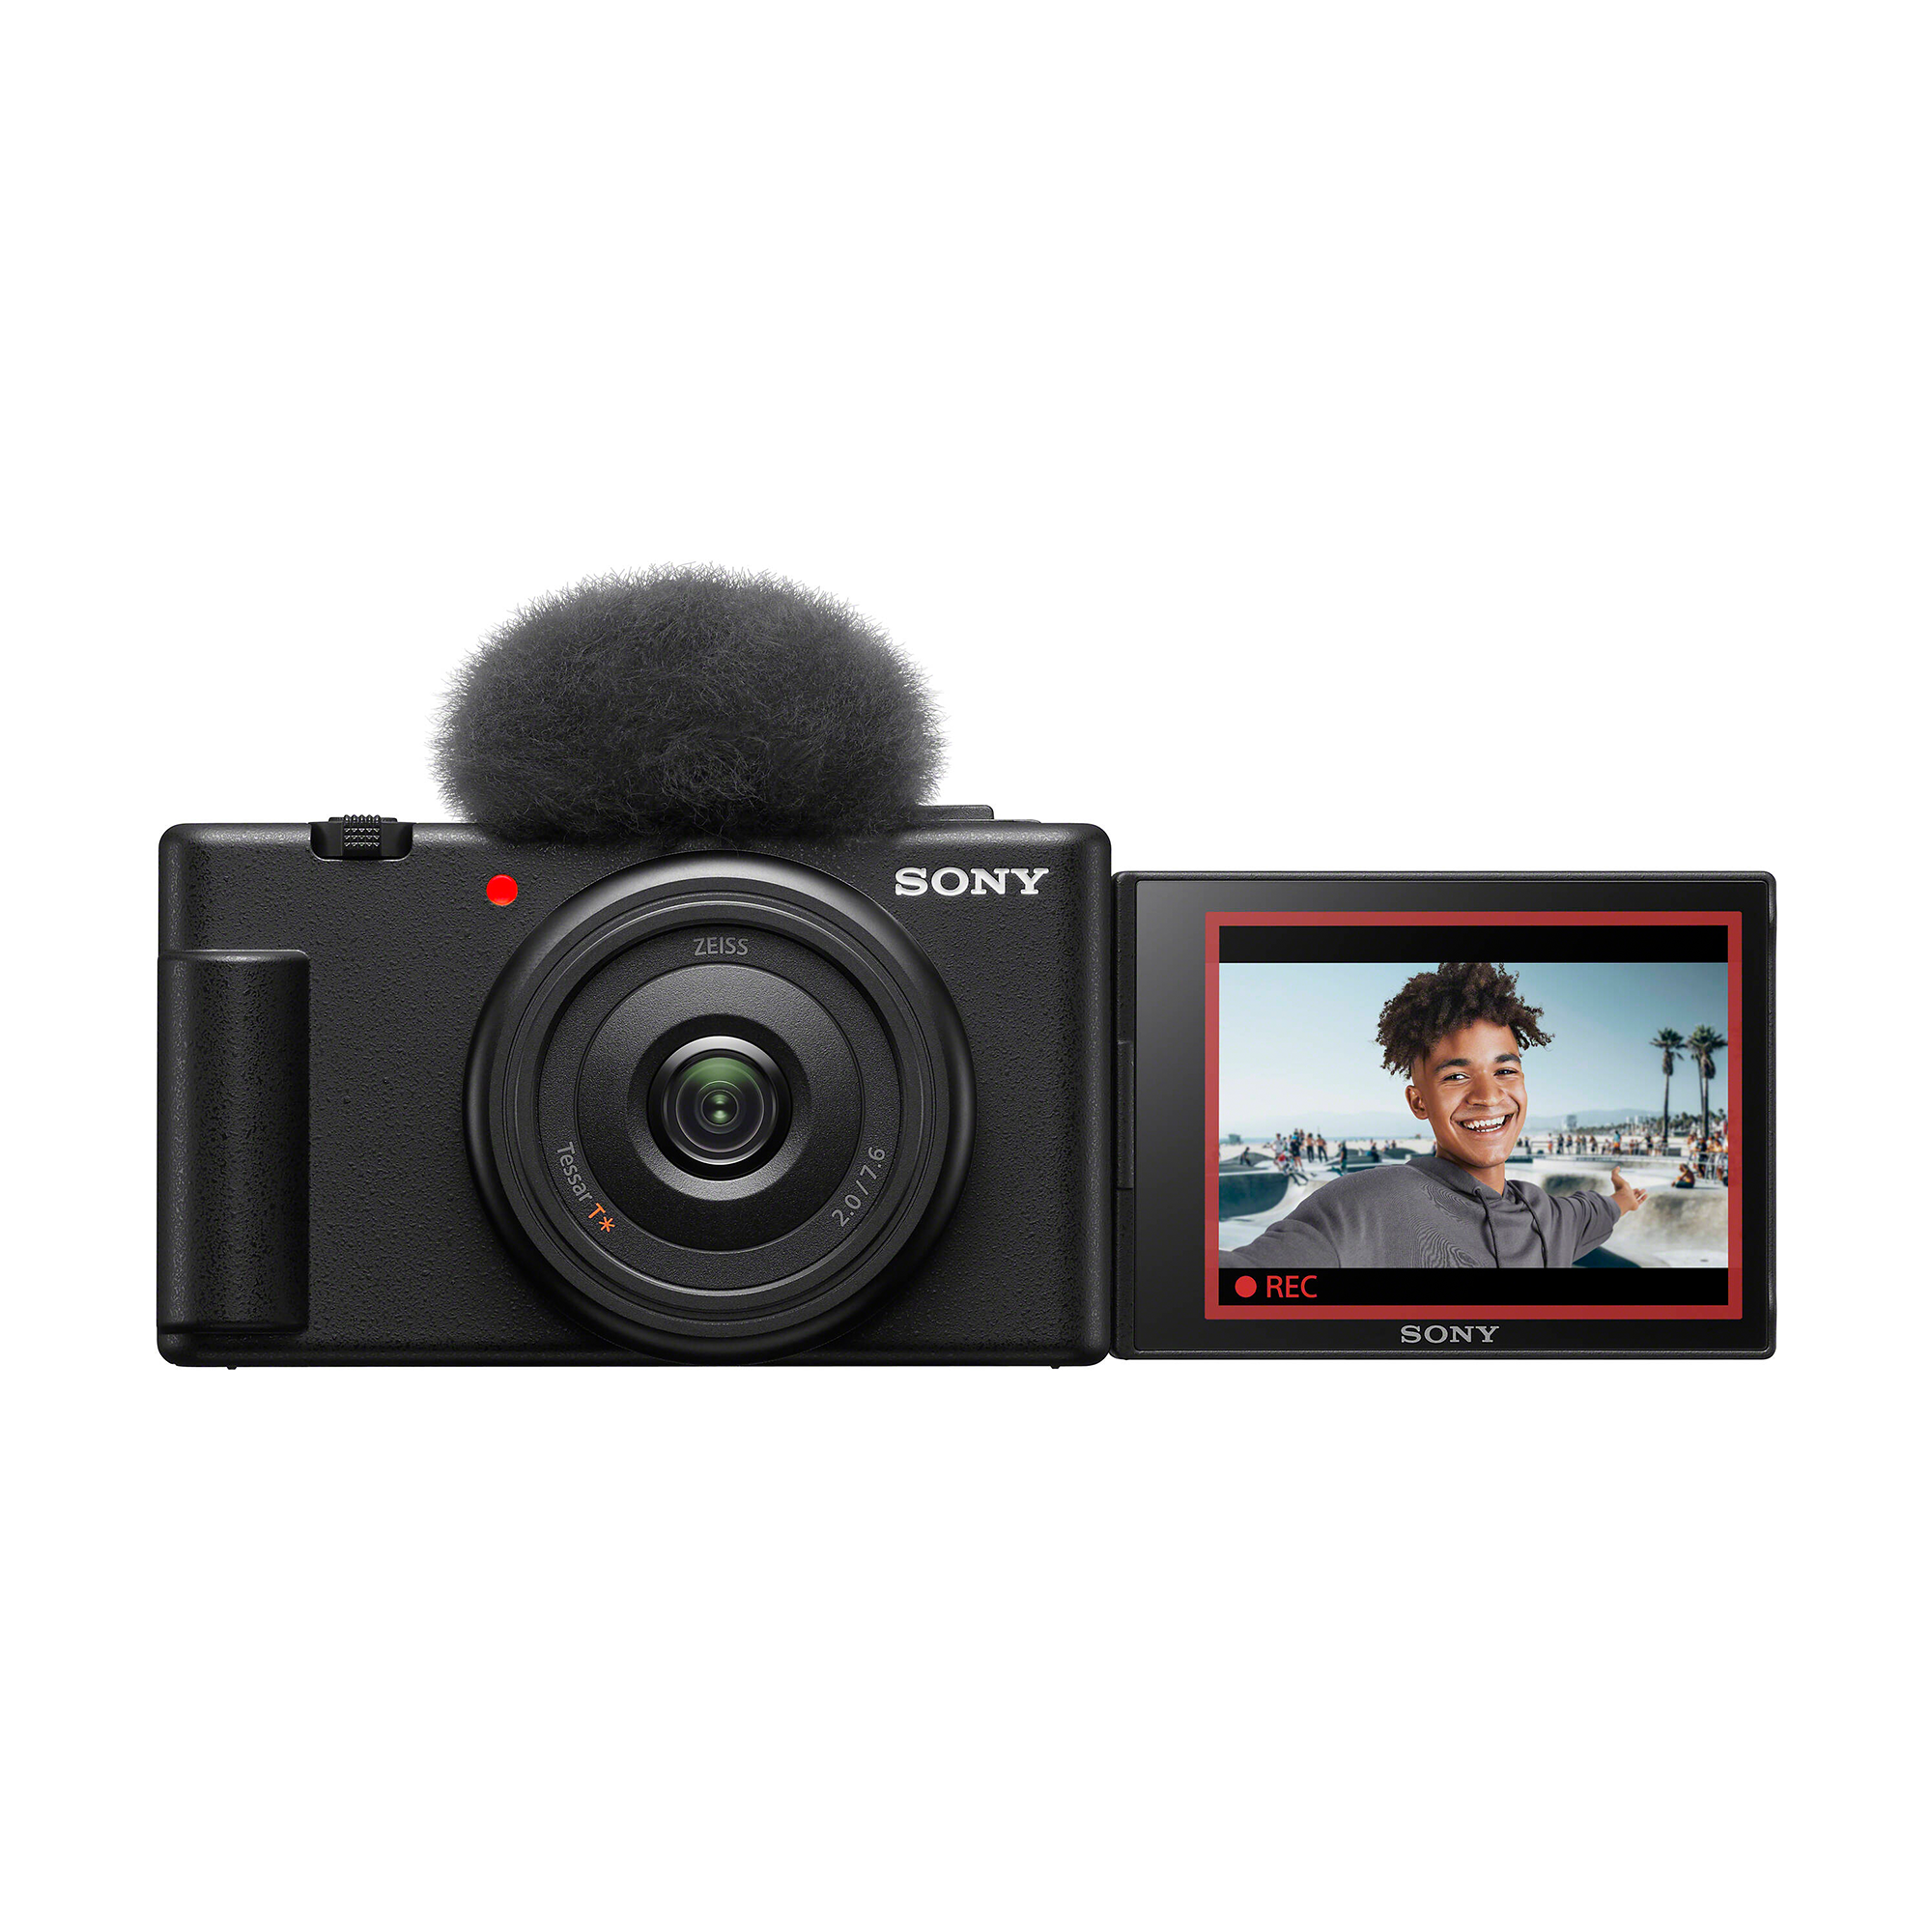 Sony ZV-1F Digital Camera (Black)